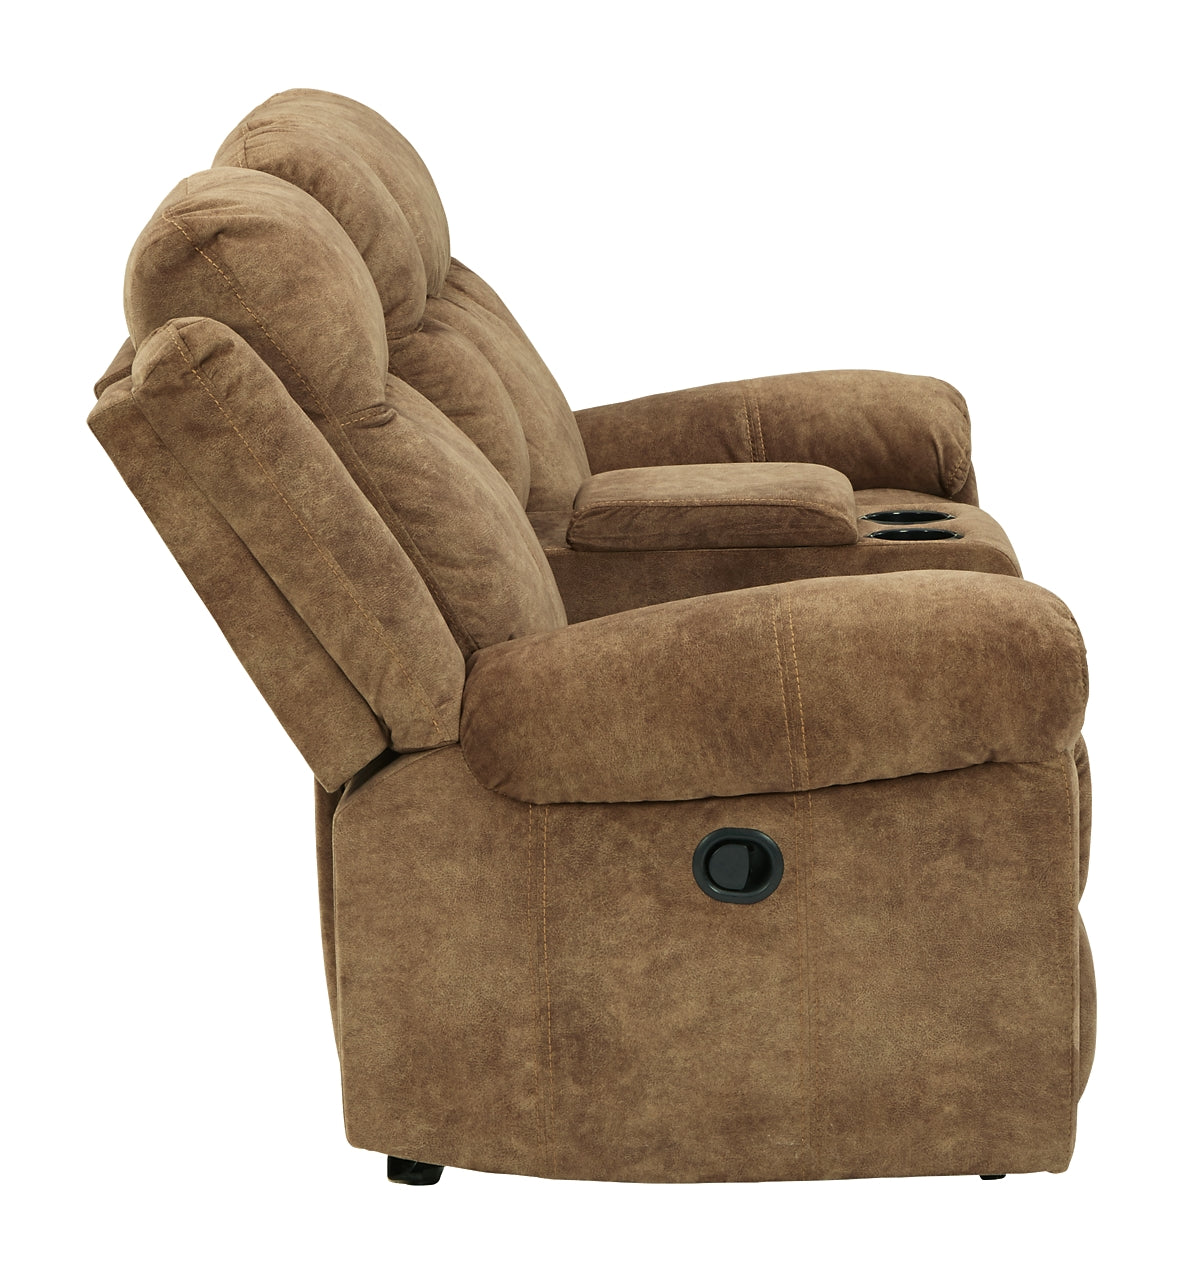 Huddle-Up Sofa, Loveseat and Recliner at Cloud 9 Mattress & Furniture furniture, home furnishing, home decor